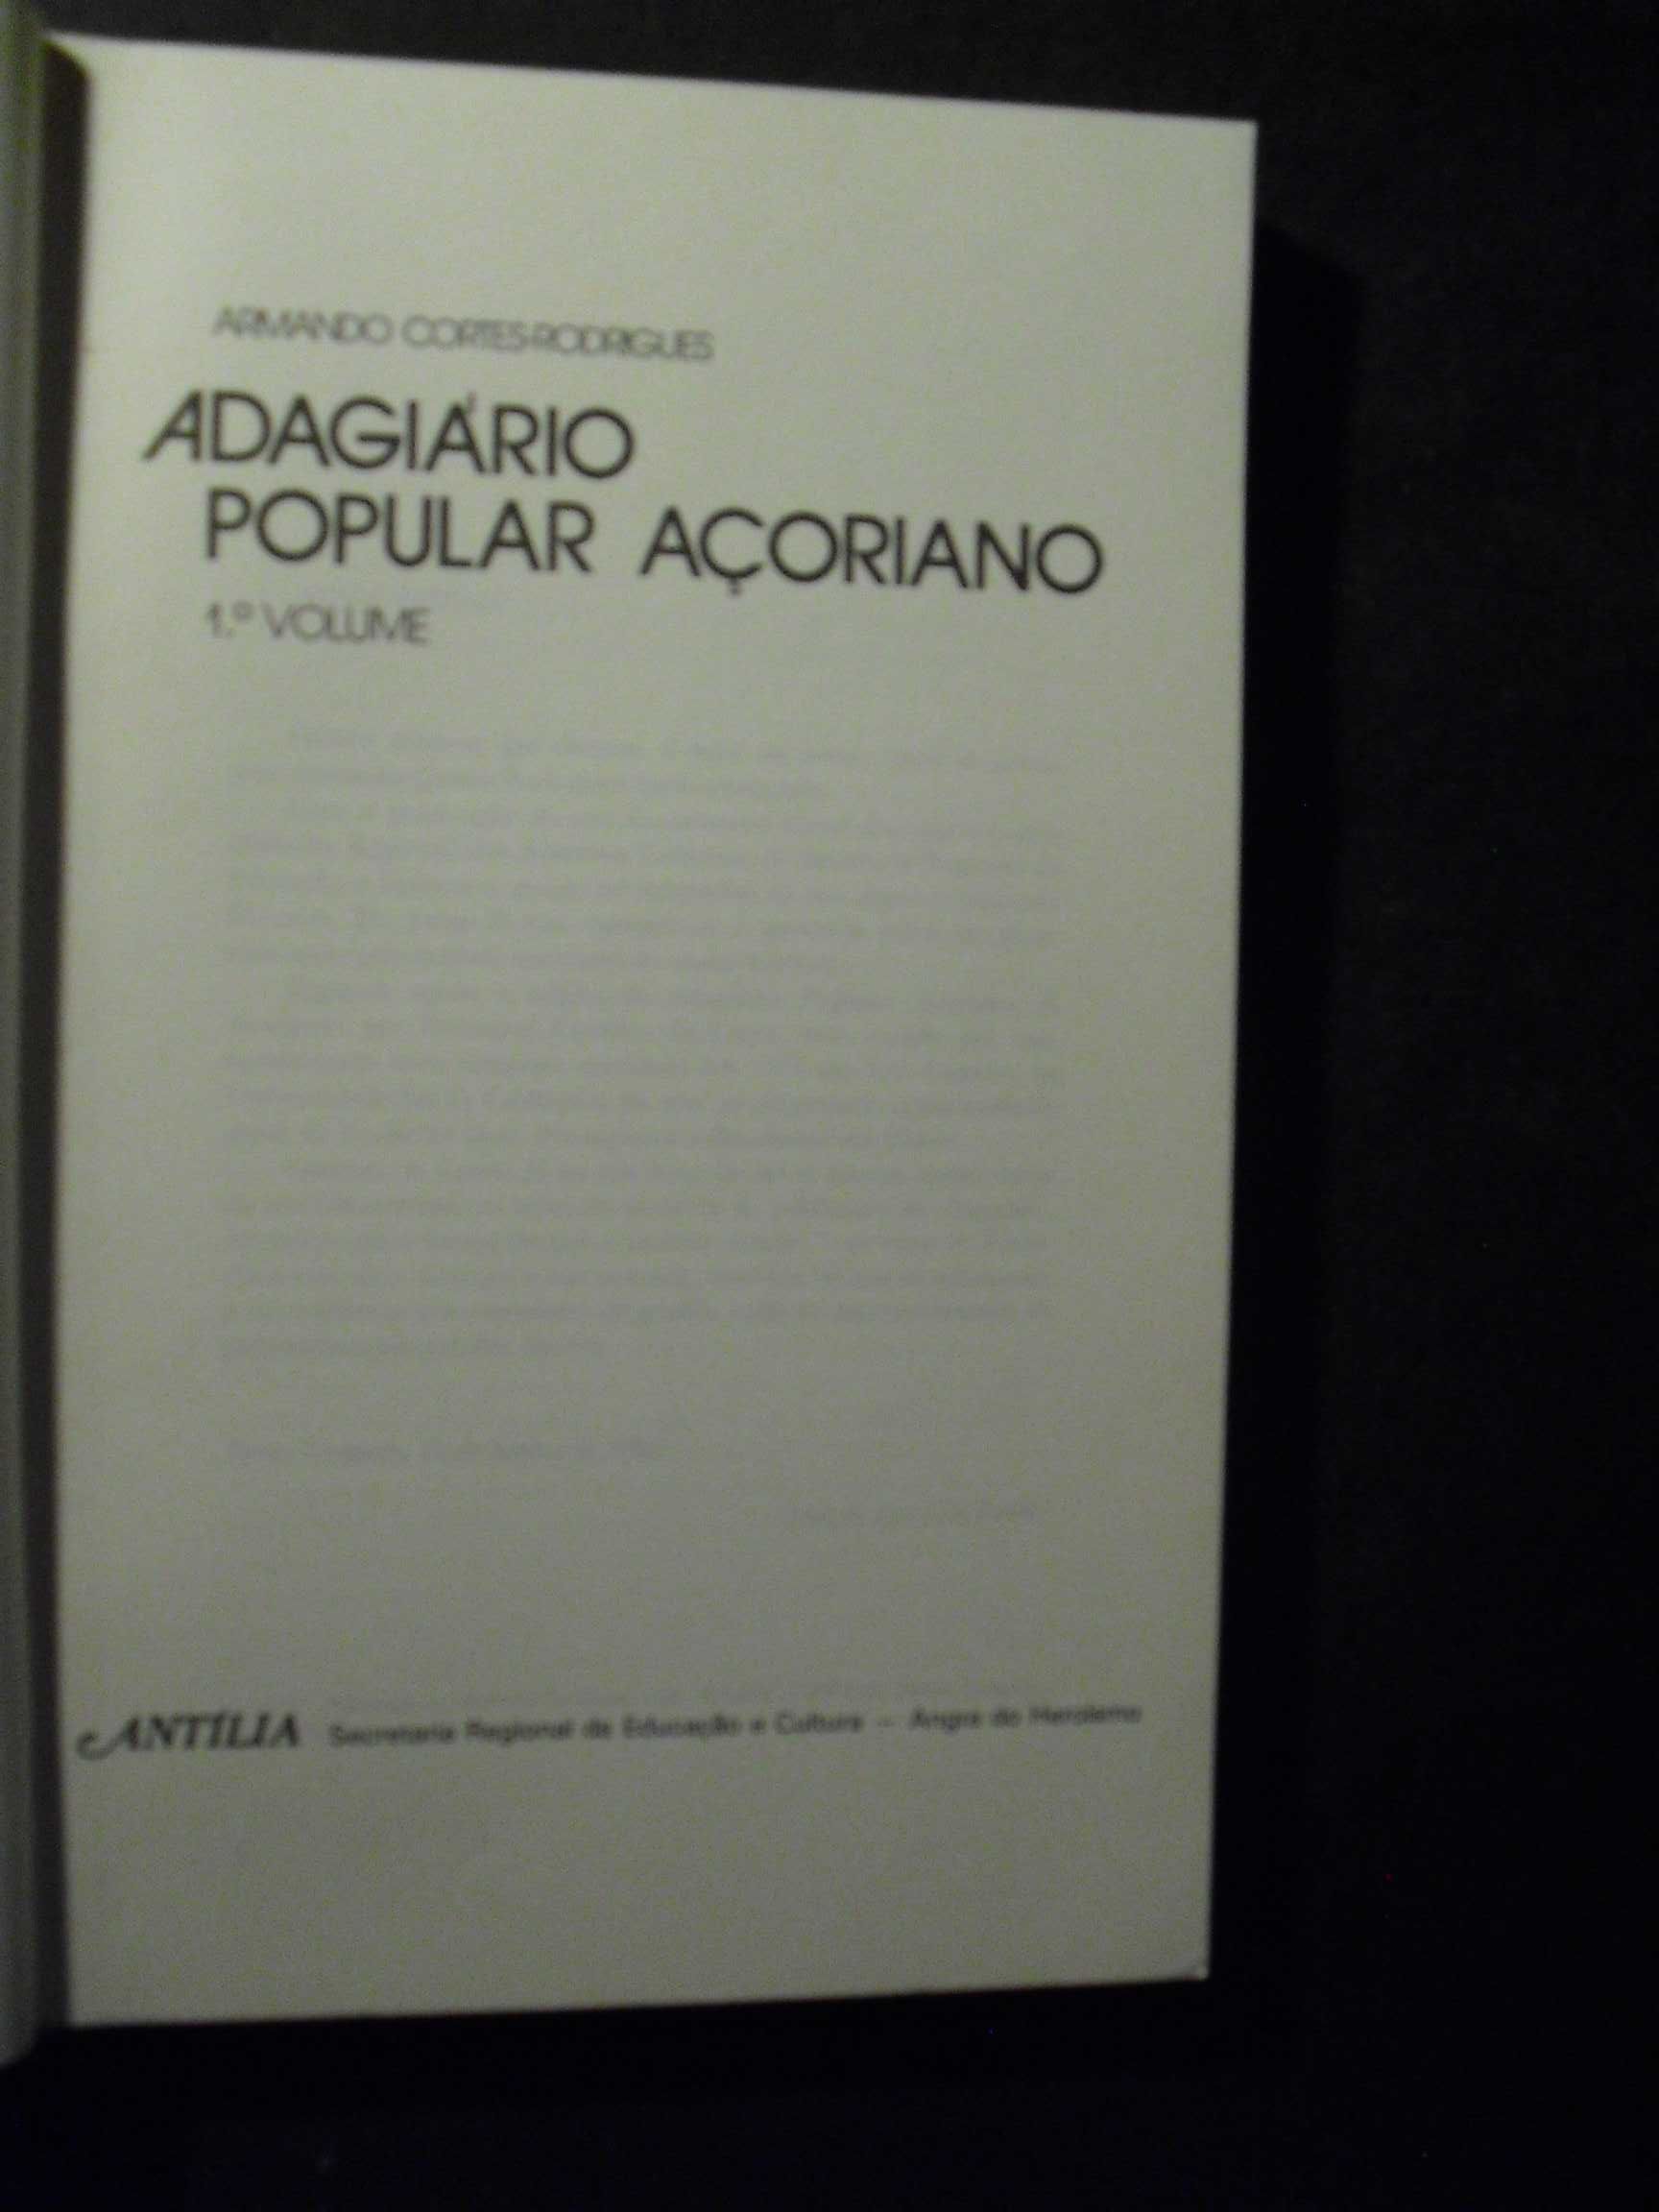 Rodrigues (Armando Cortes);Adagiário Popular Açoriano